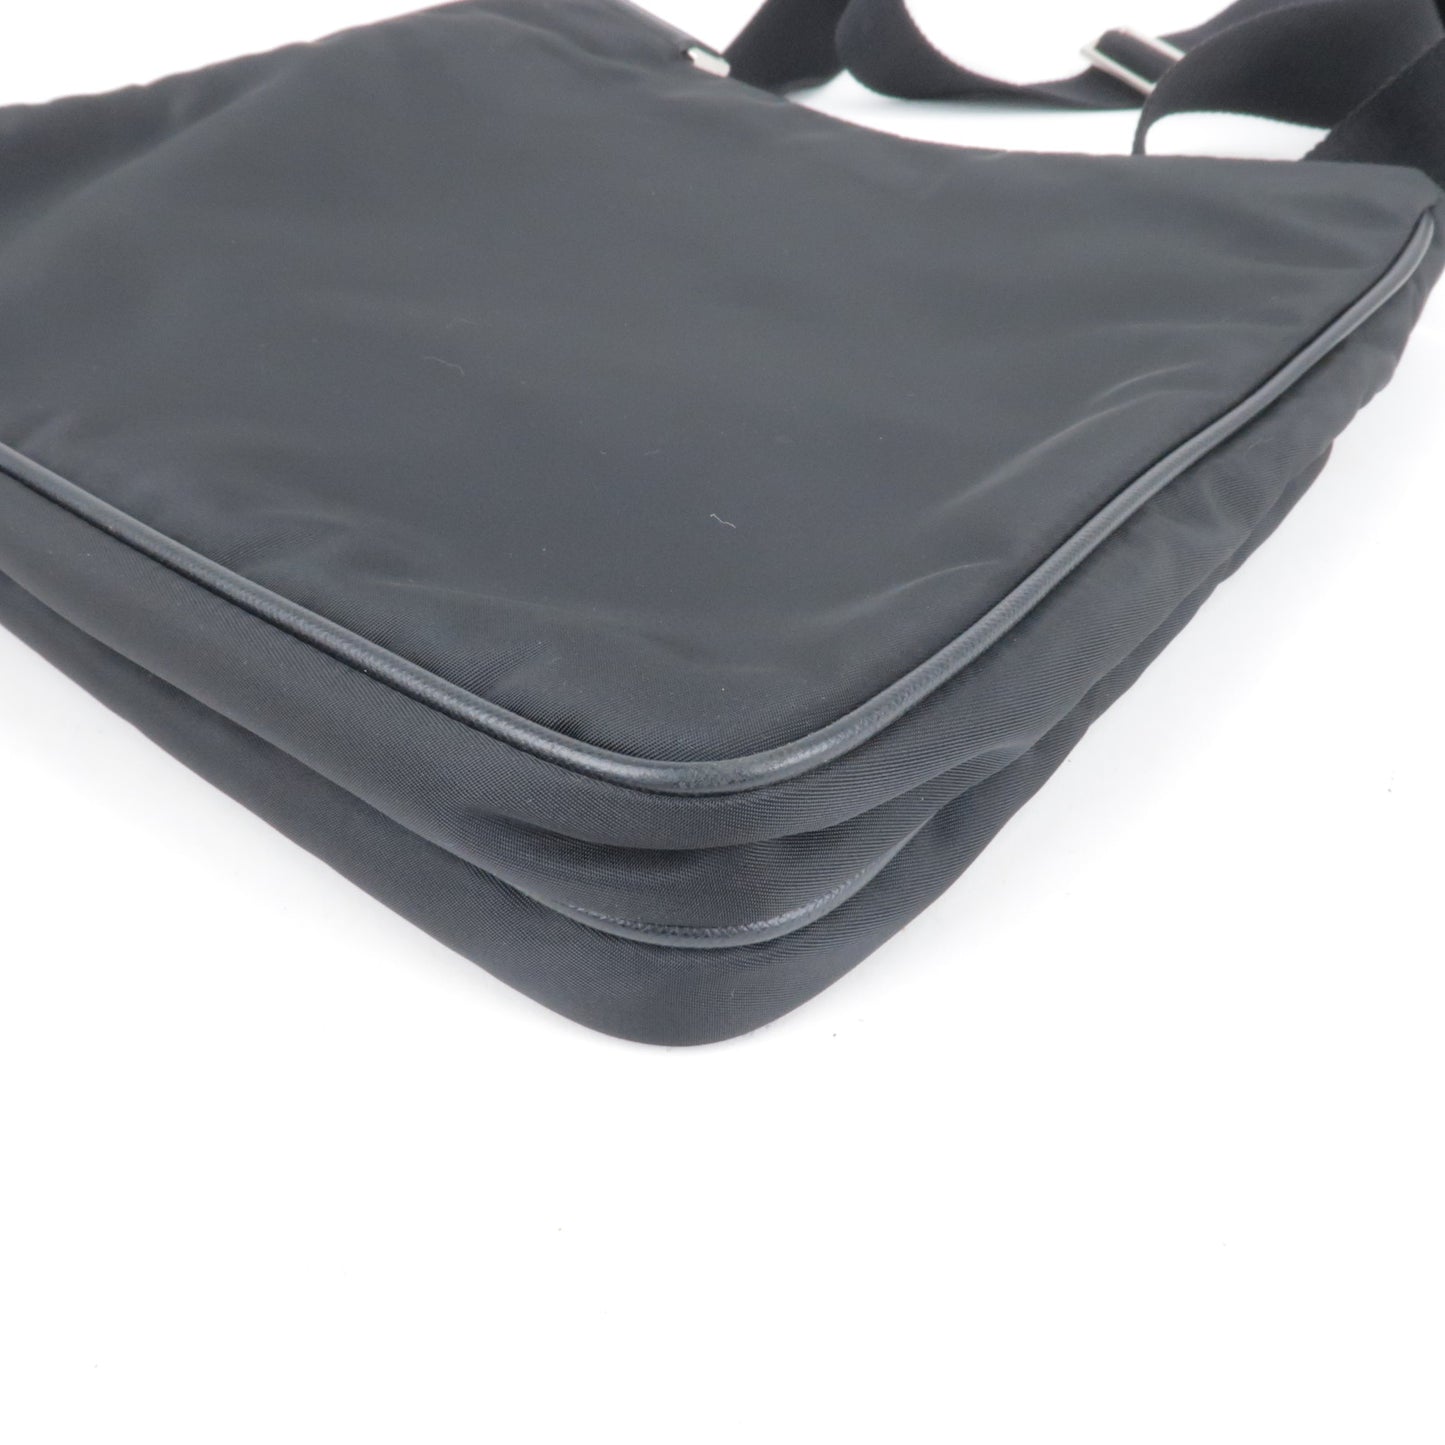 PRADA Logo Nylon Leather Shoulder Bag Purse NERO Black